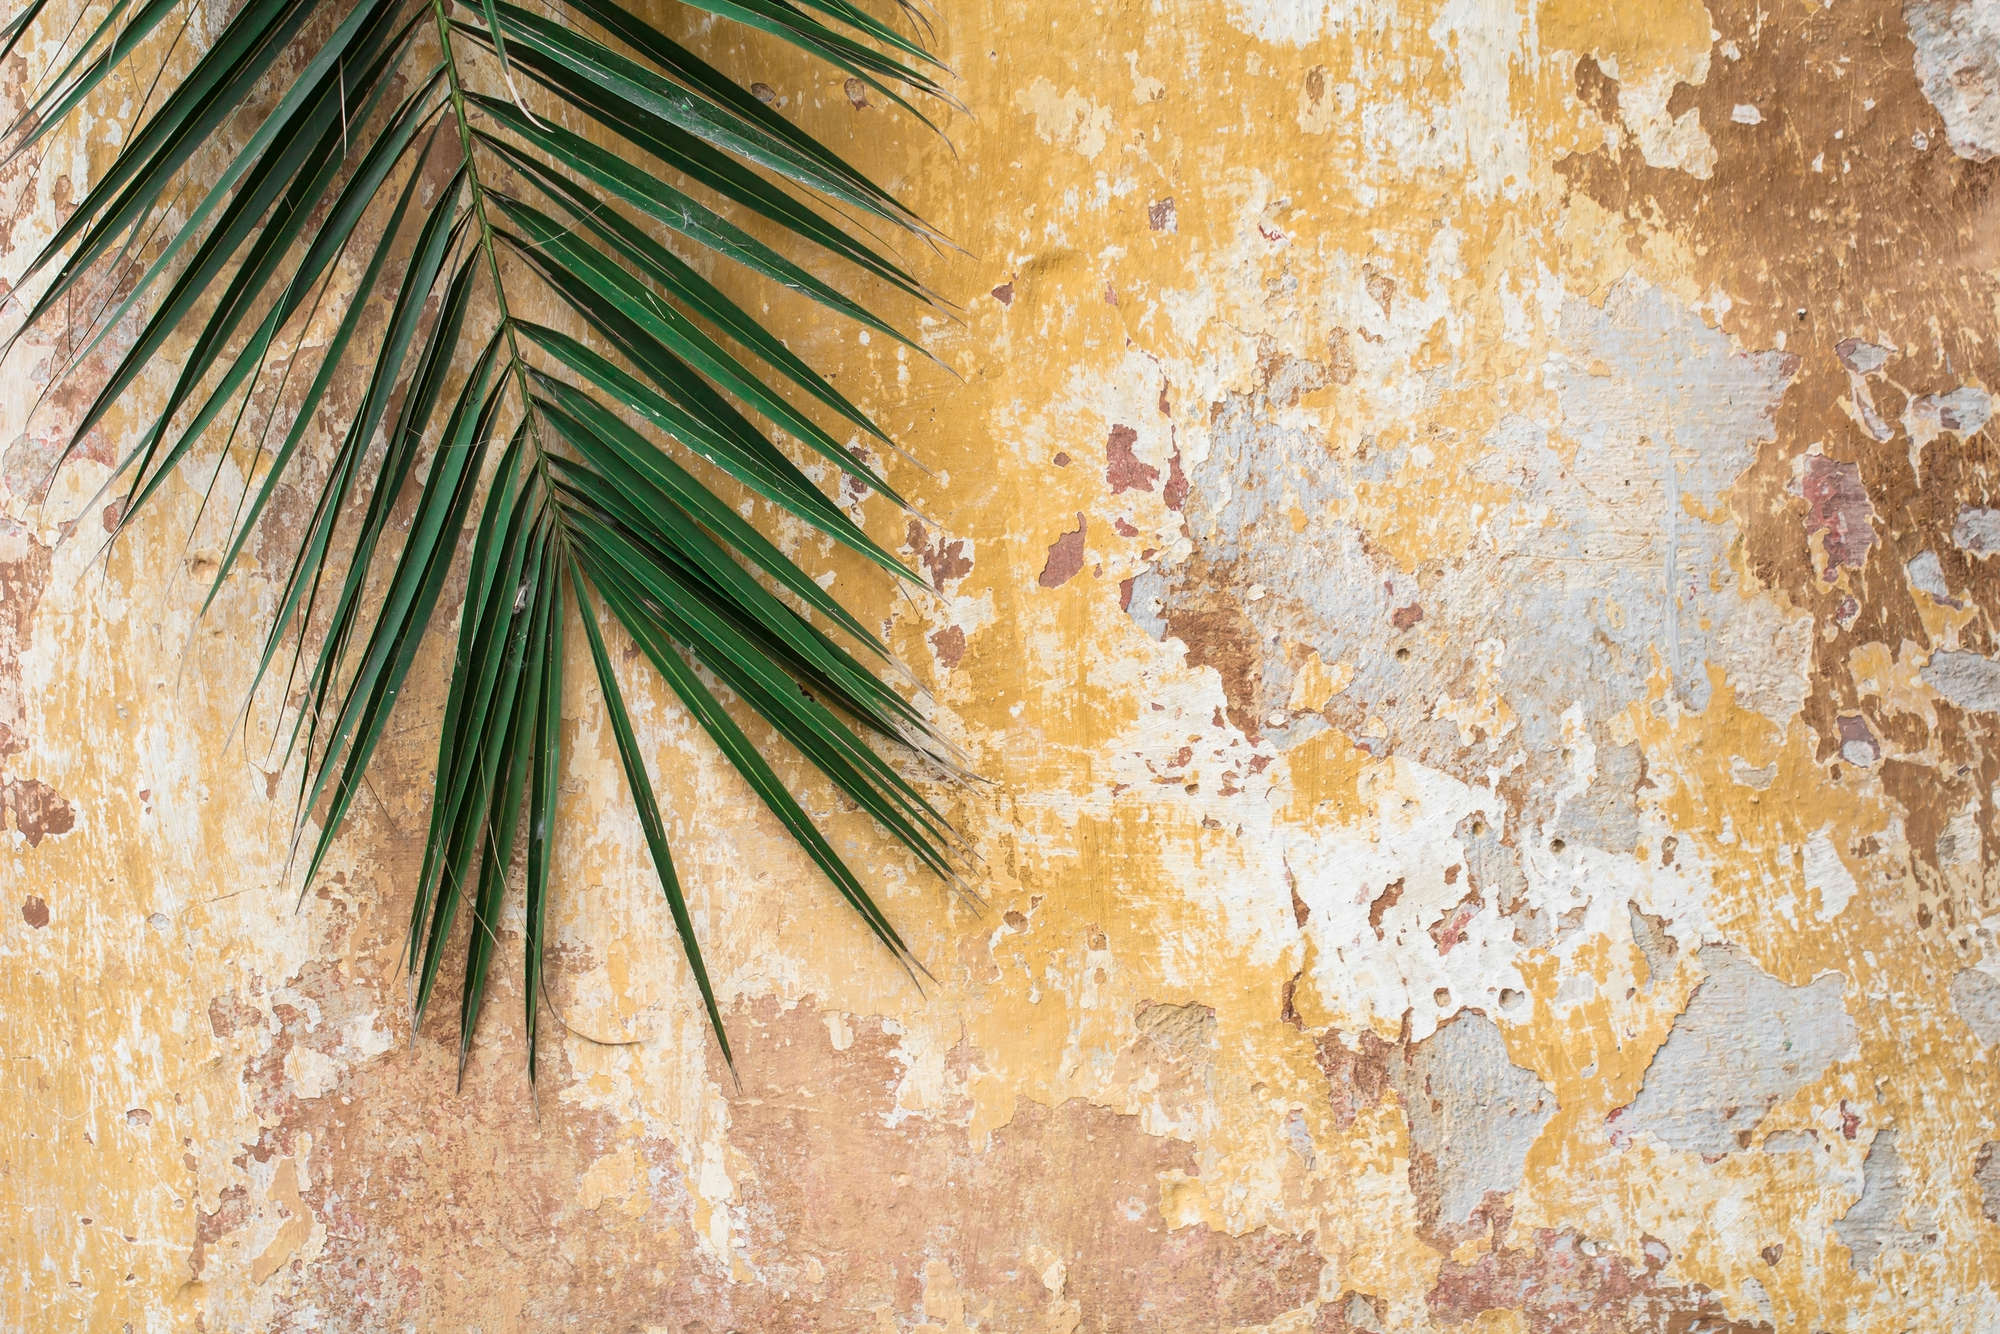             Carta da parati naturale Foglie di palma davanti a un muro di pietra su tessuto liscio premium
        